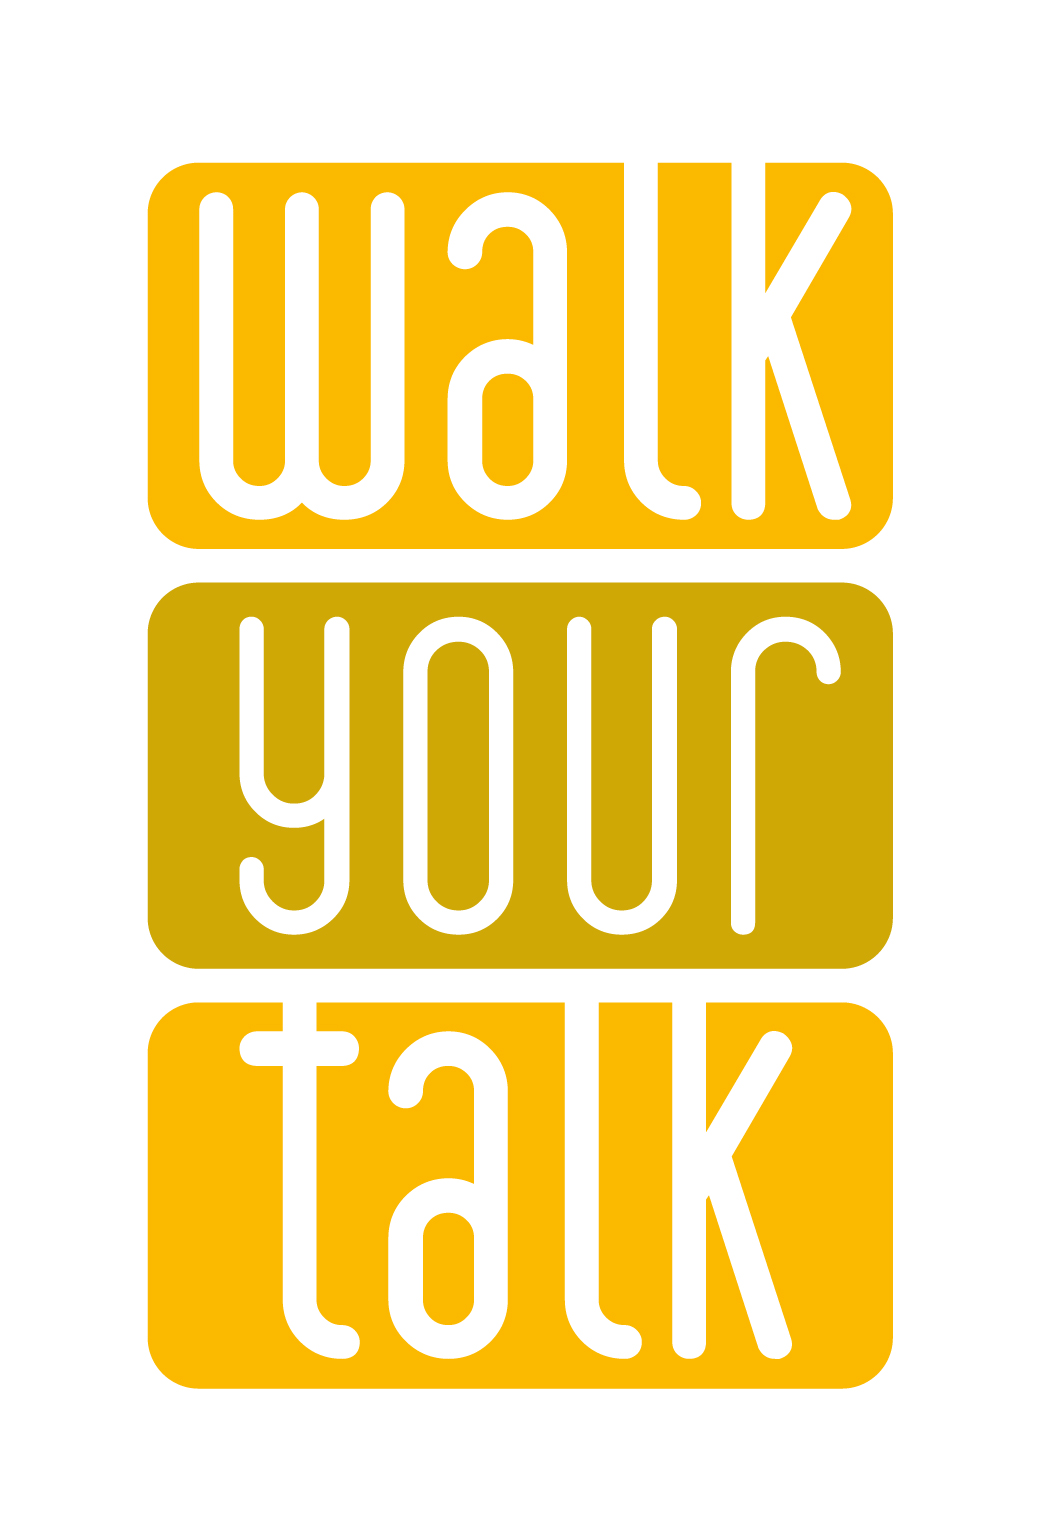 Walk Your Talk